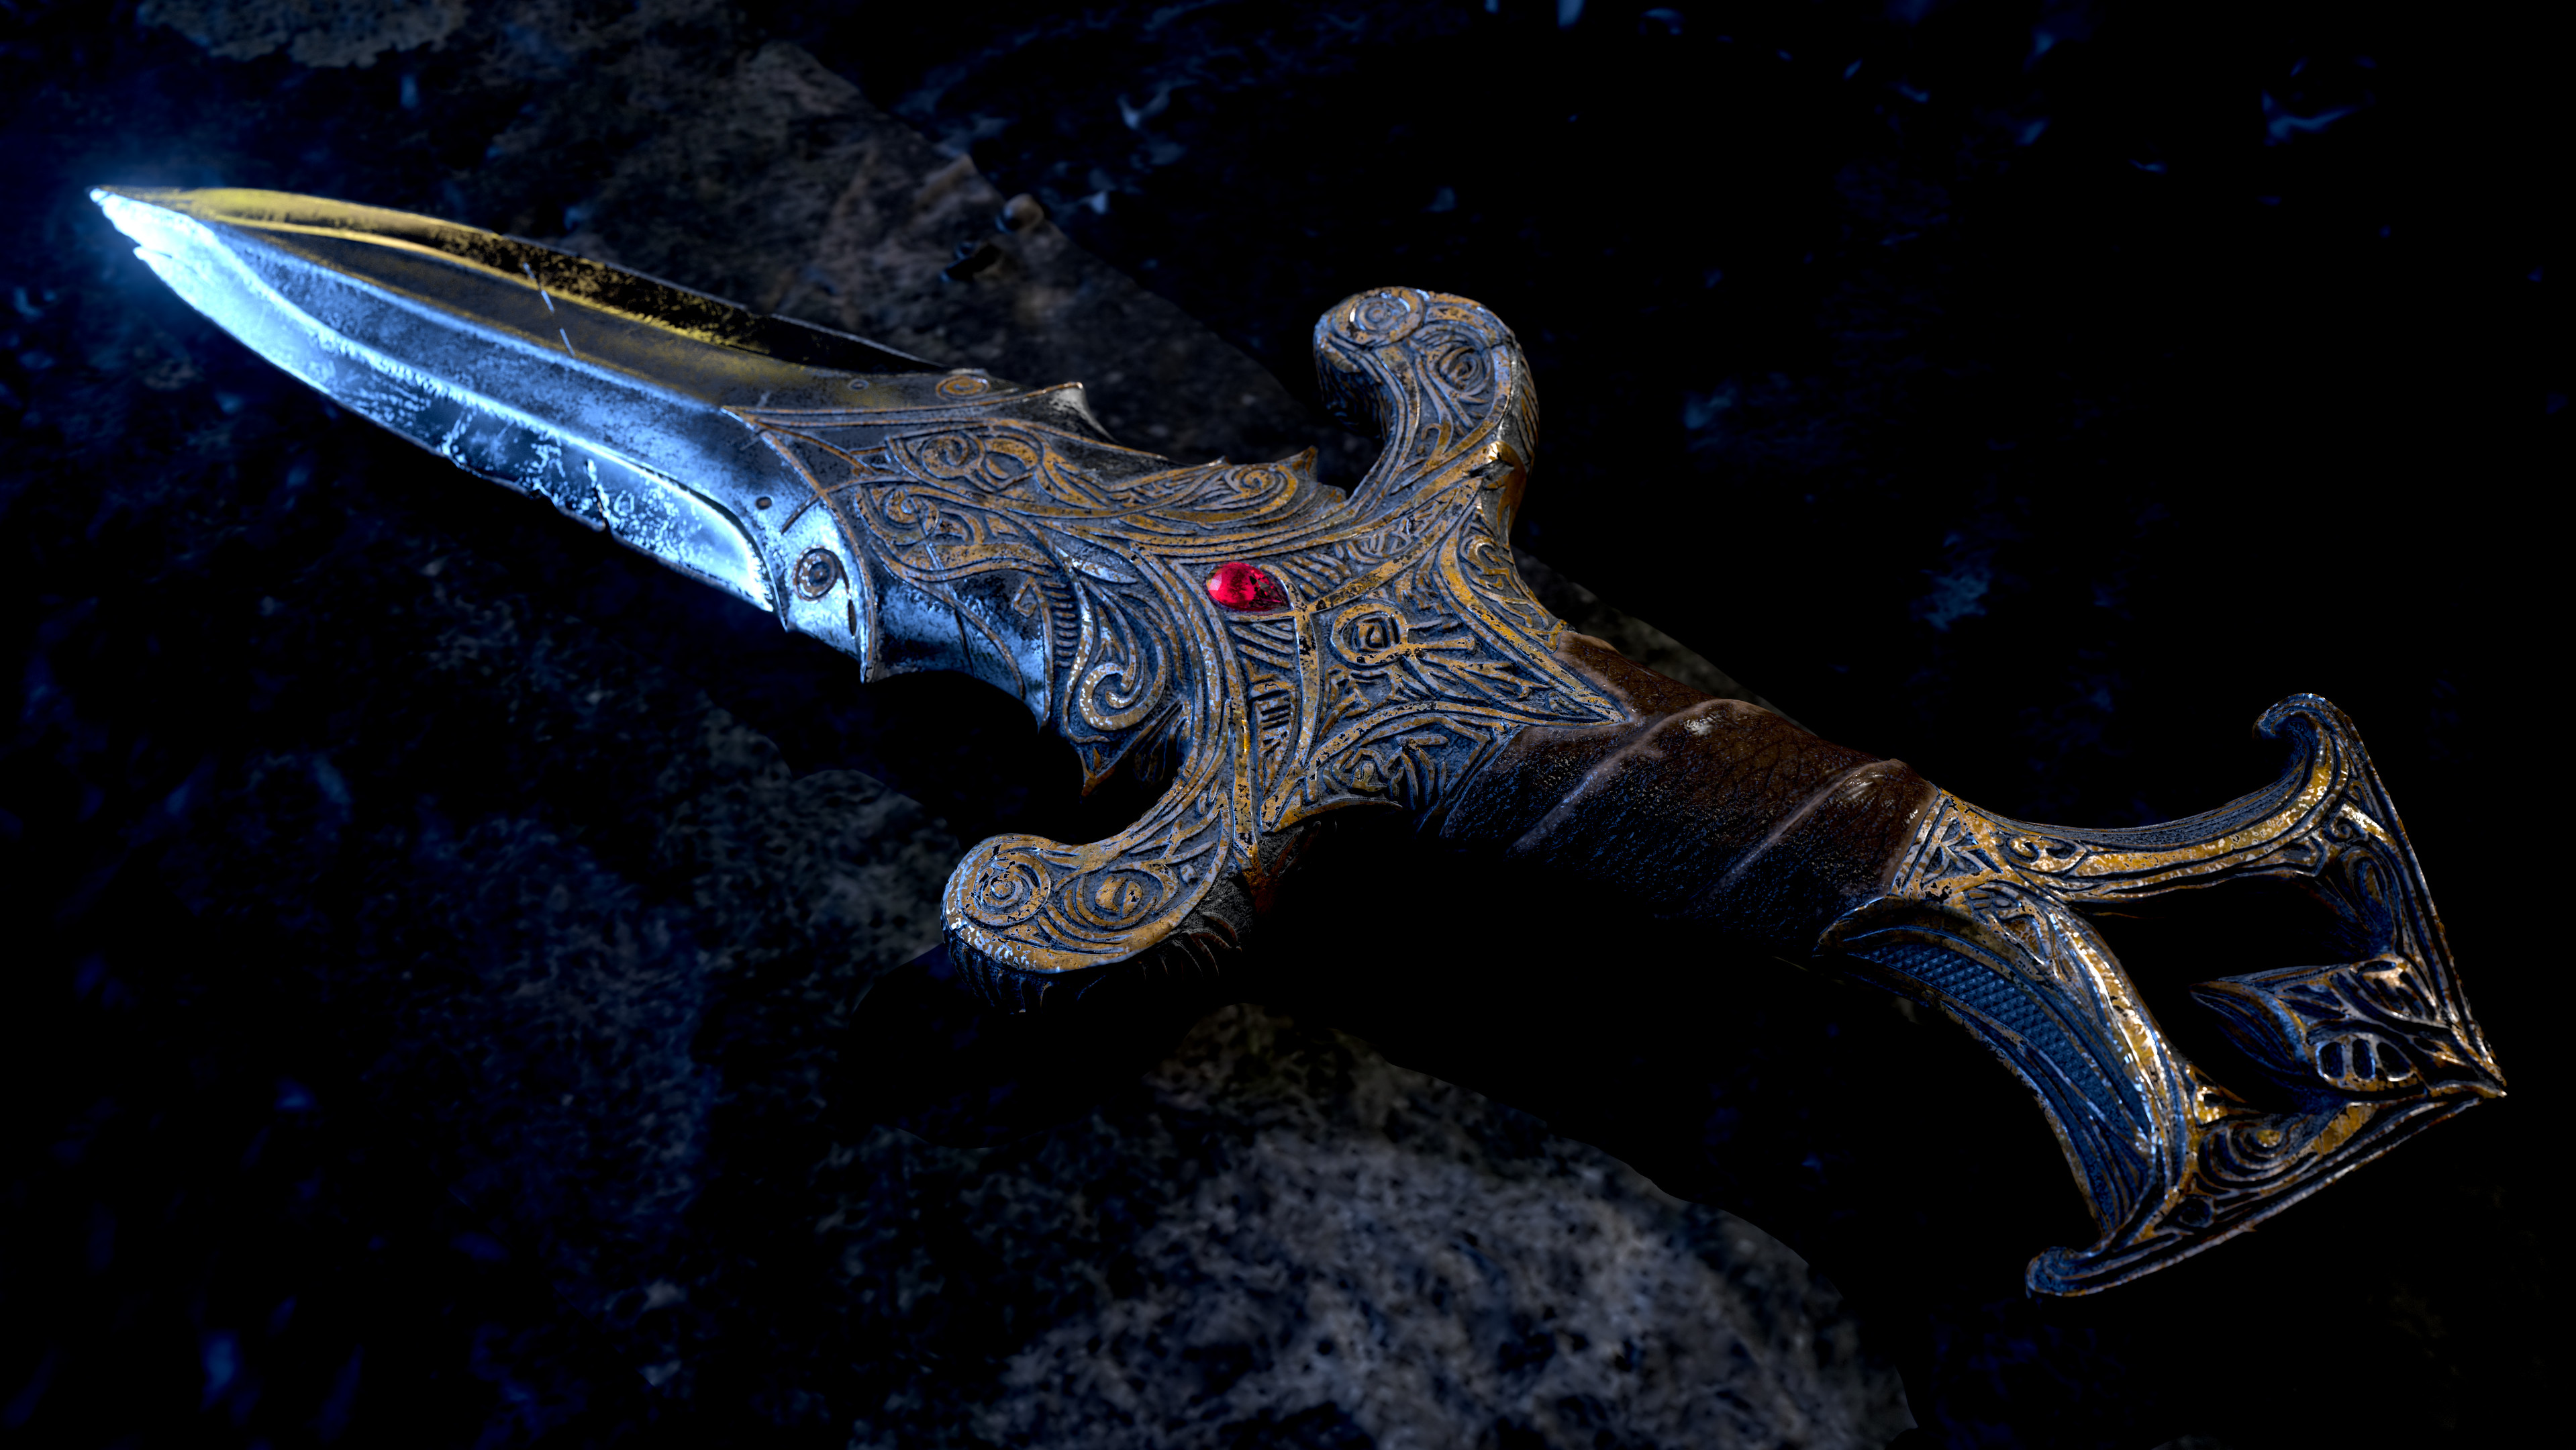 redshift render in Maya of the dagger model